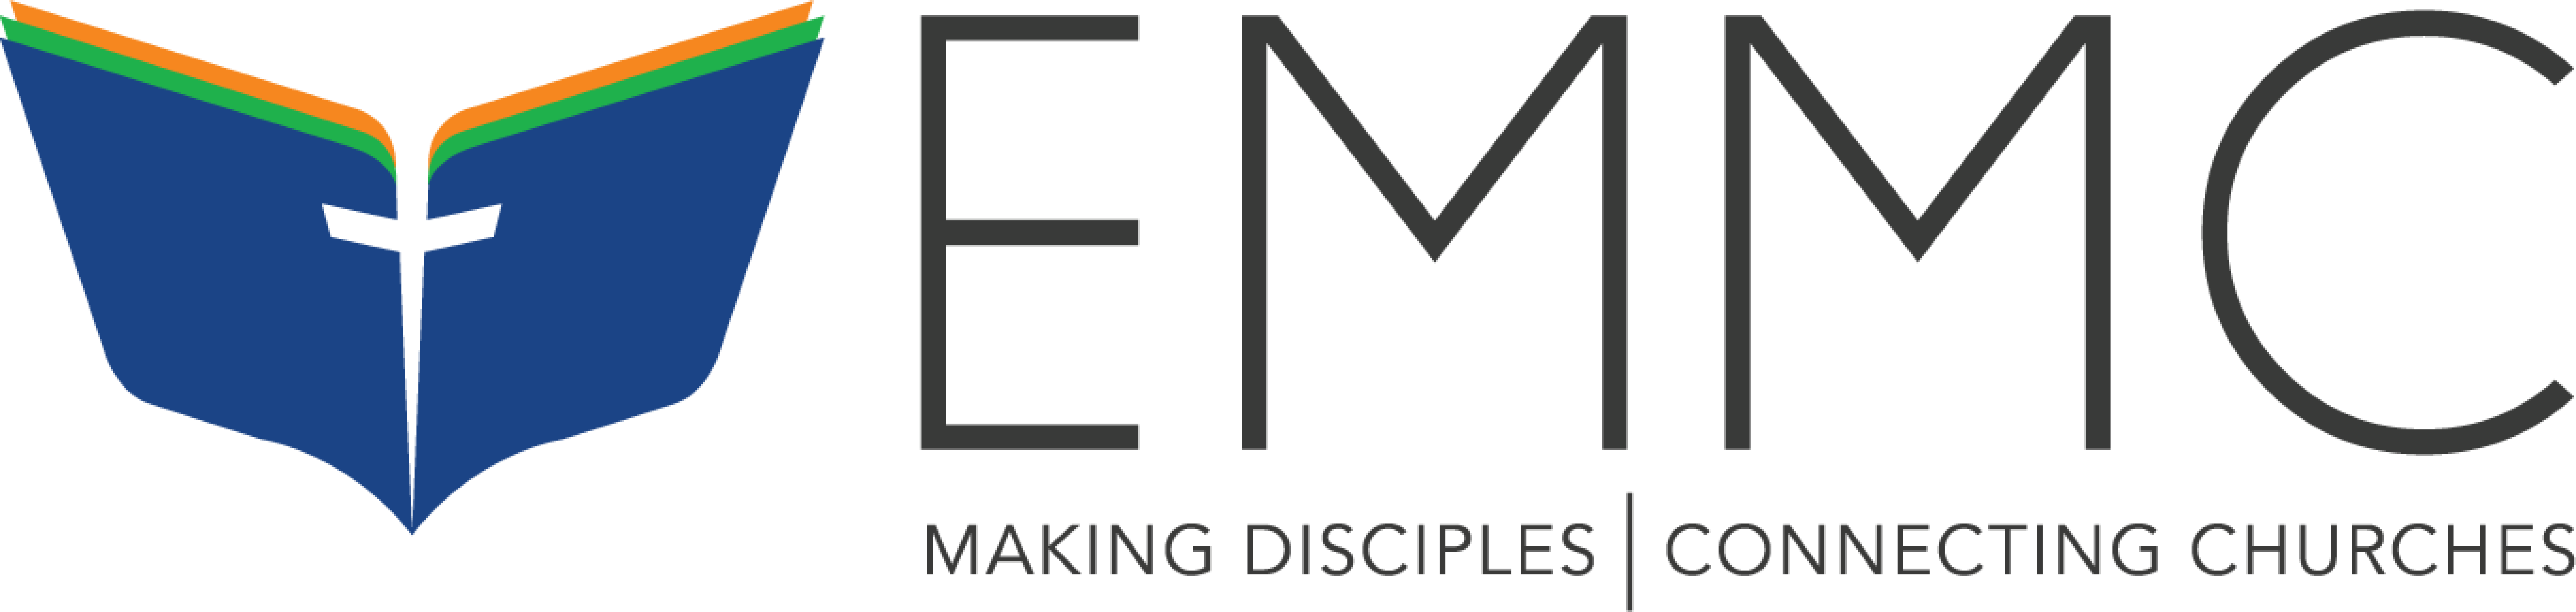 Evangelical Mennonite Mission Conference logo